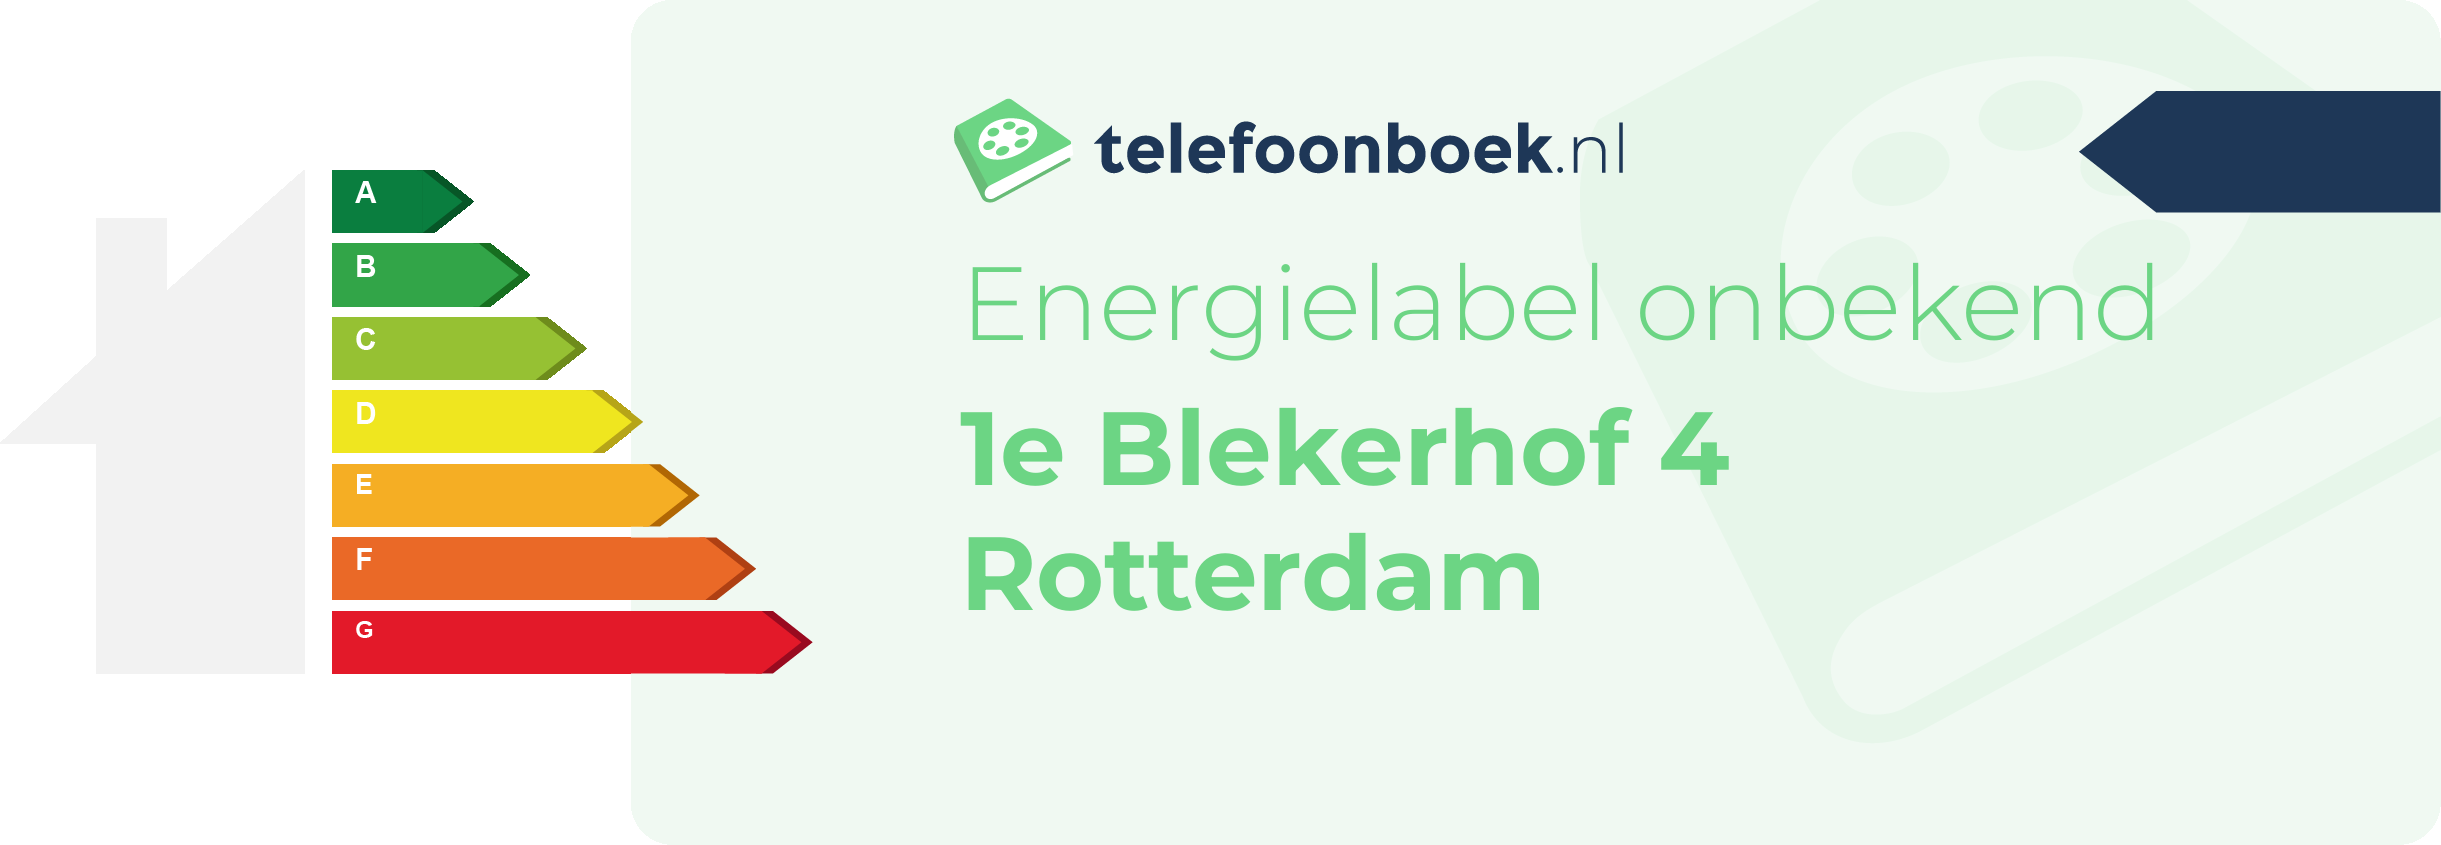 Energielabel 1e Blekerhof 4 Rotterdam